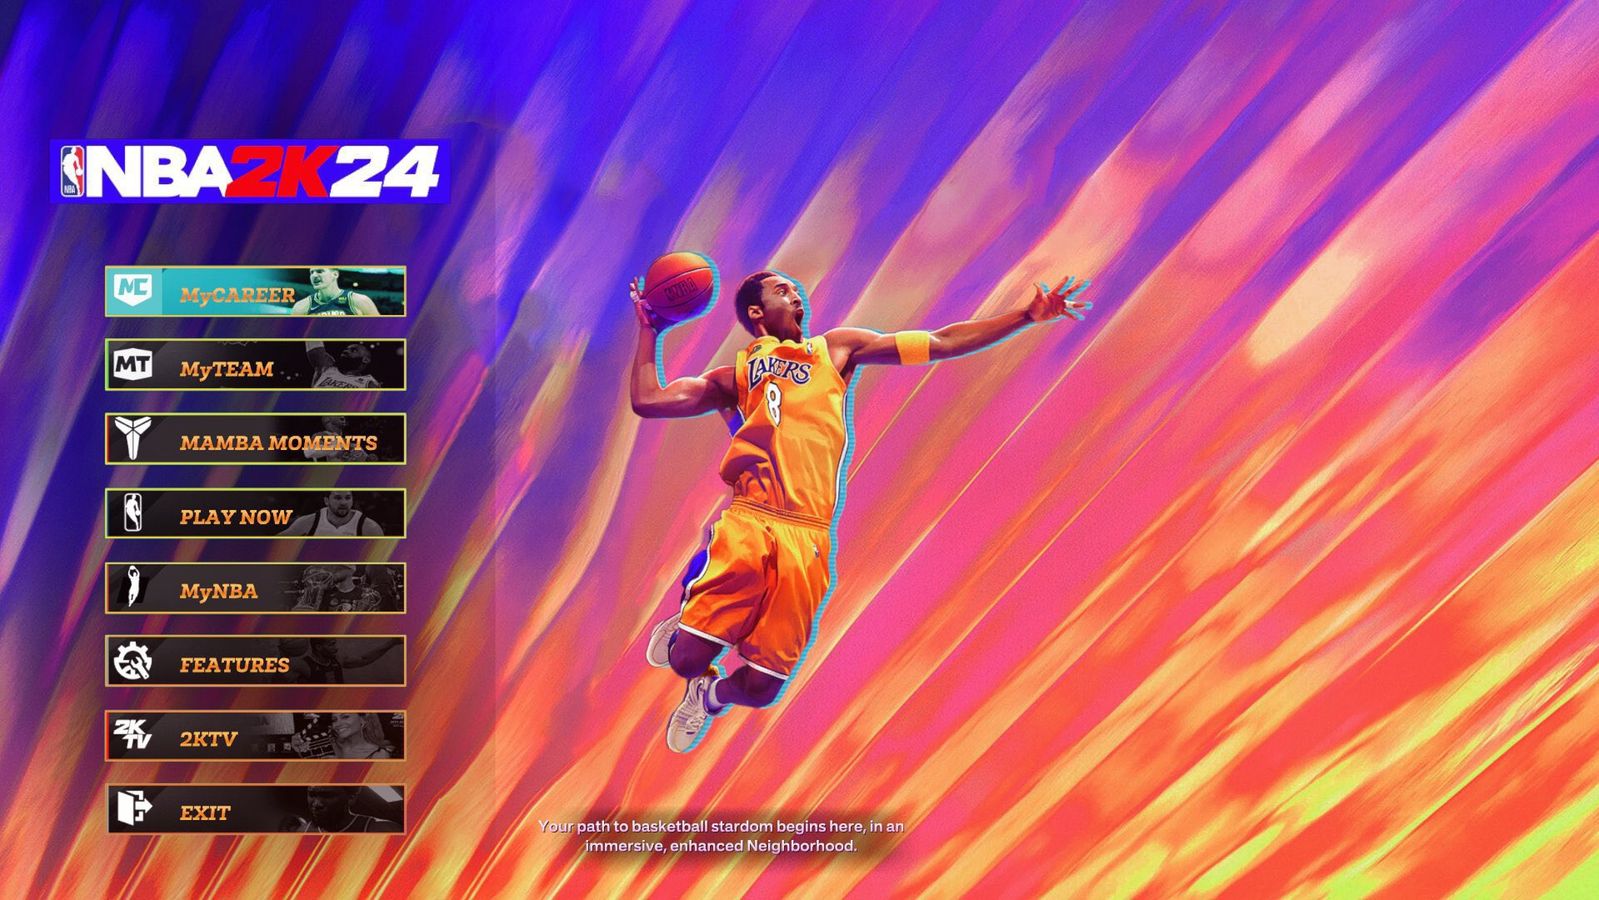 Access MyNBA from the main menu in NBA 2K24